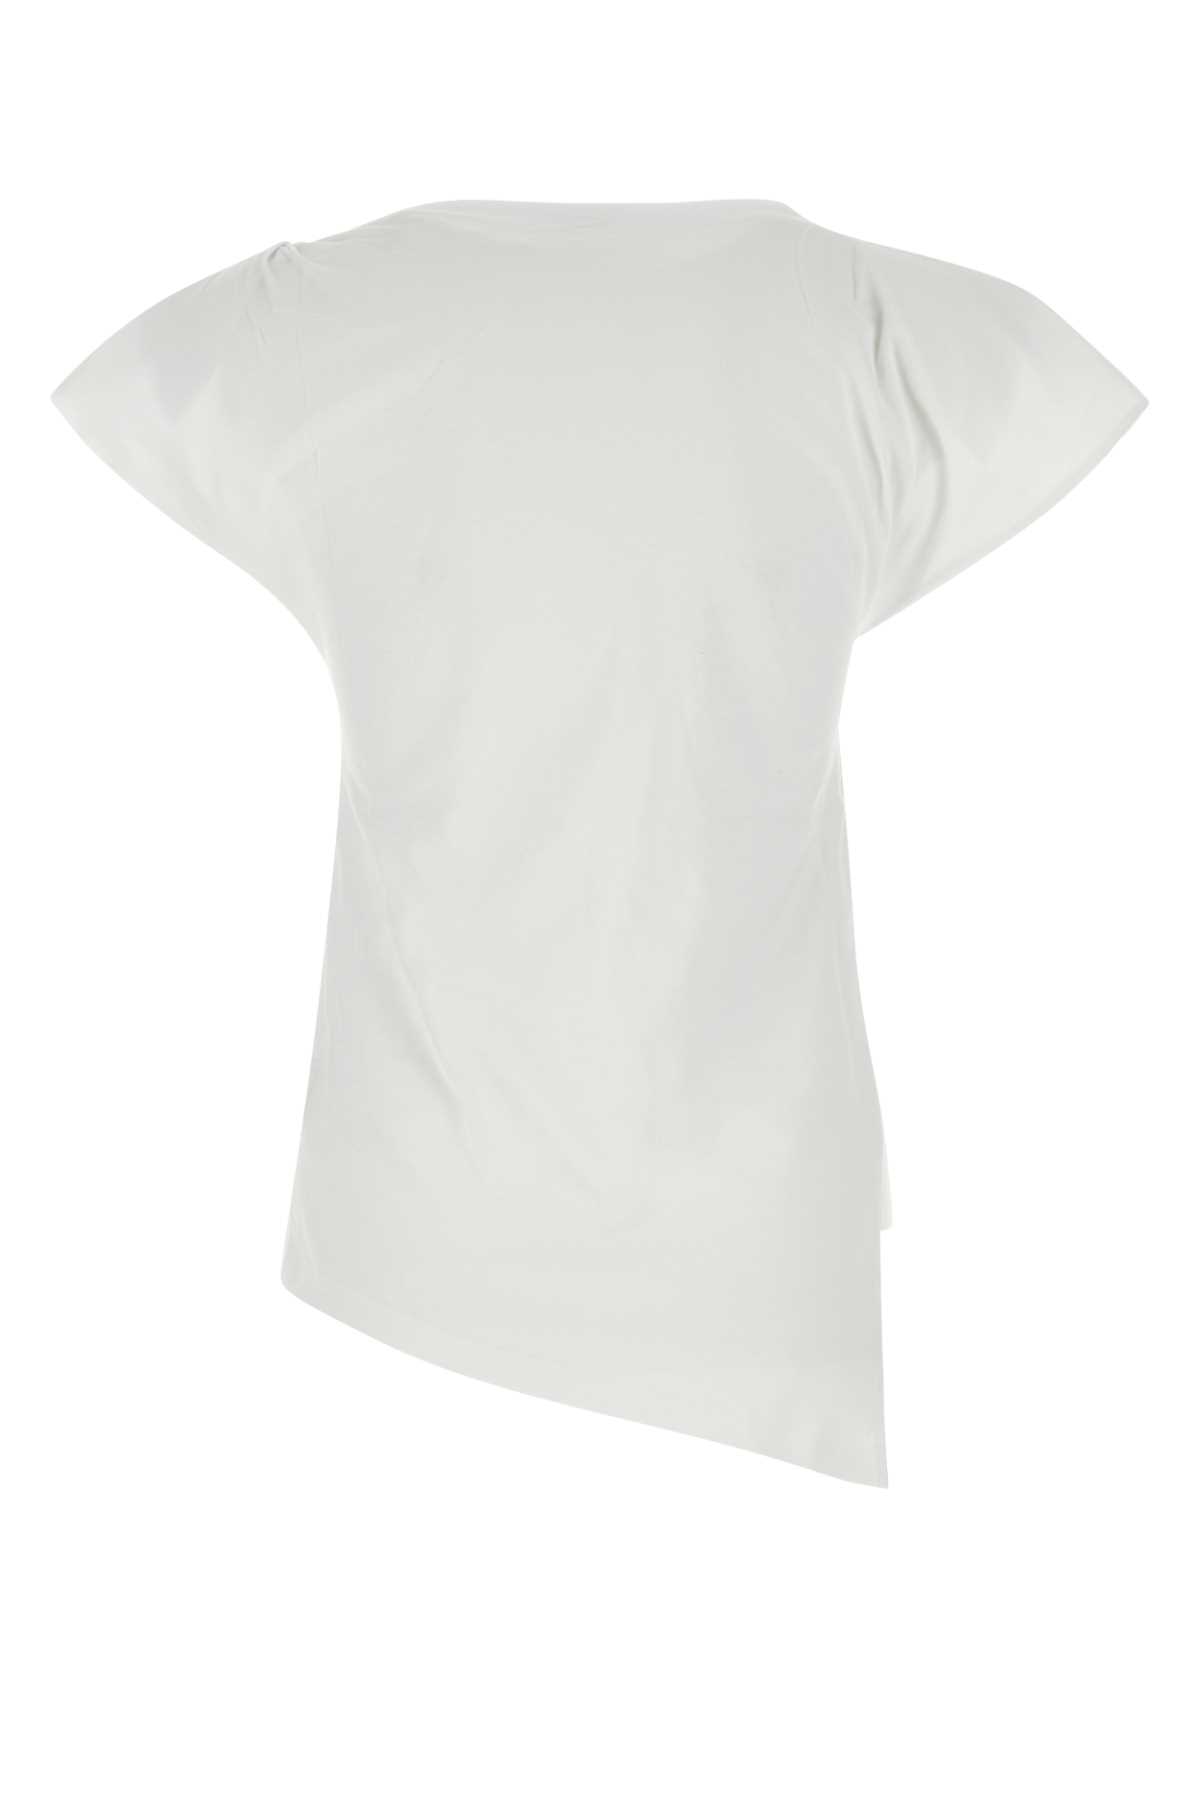 Isabel Marant White Cotton Sebani T-shirt